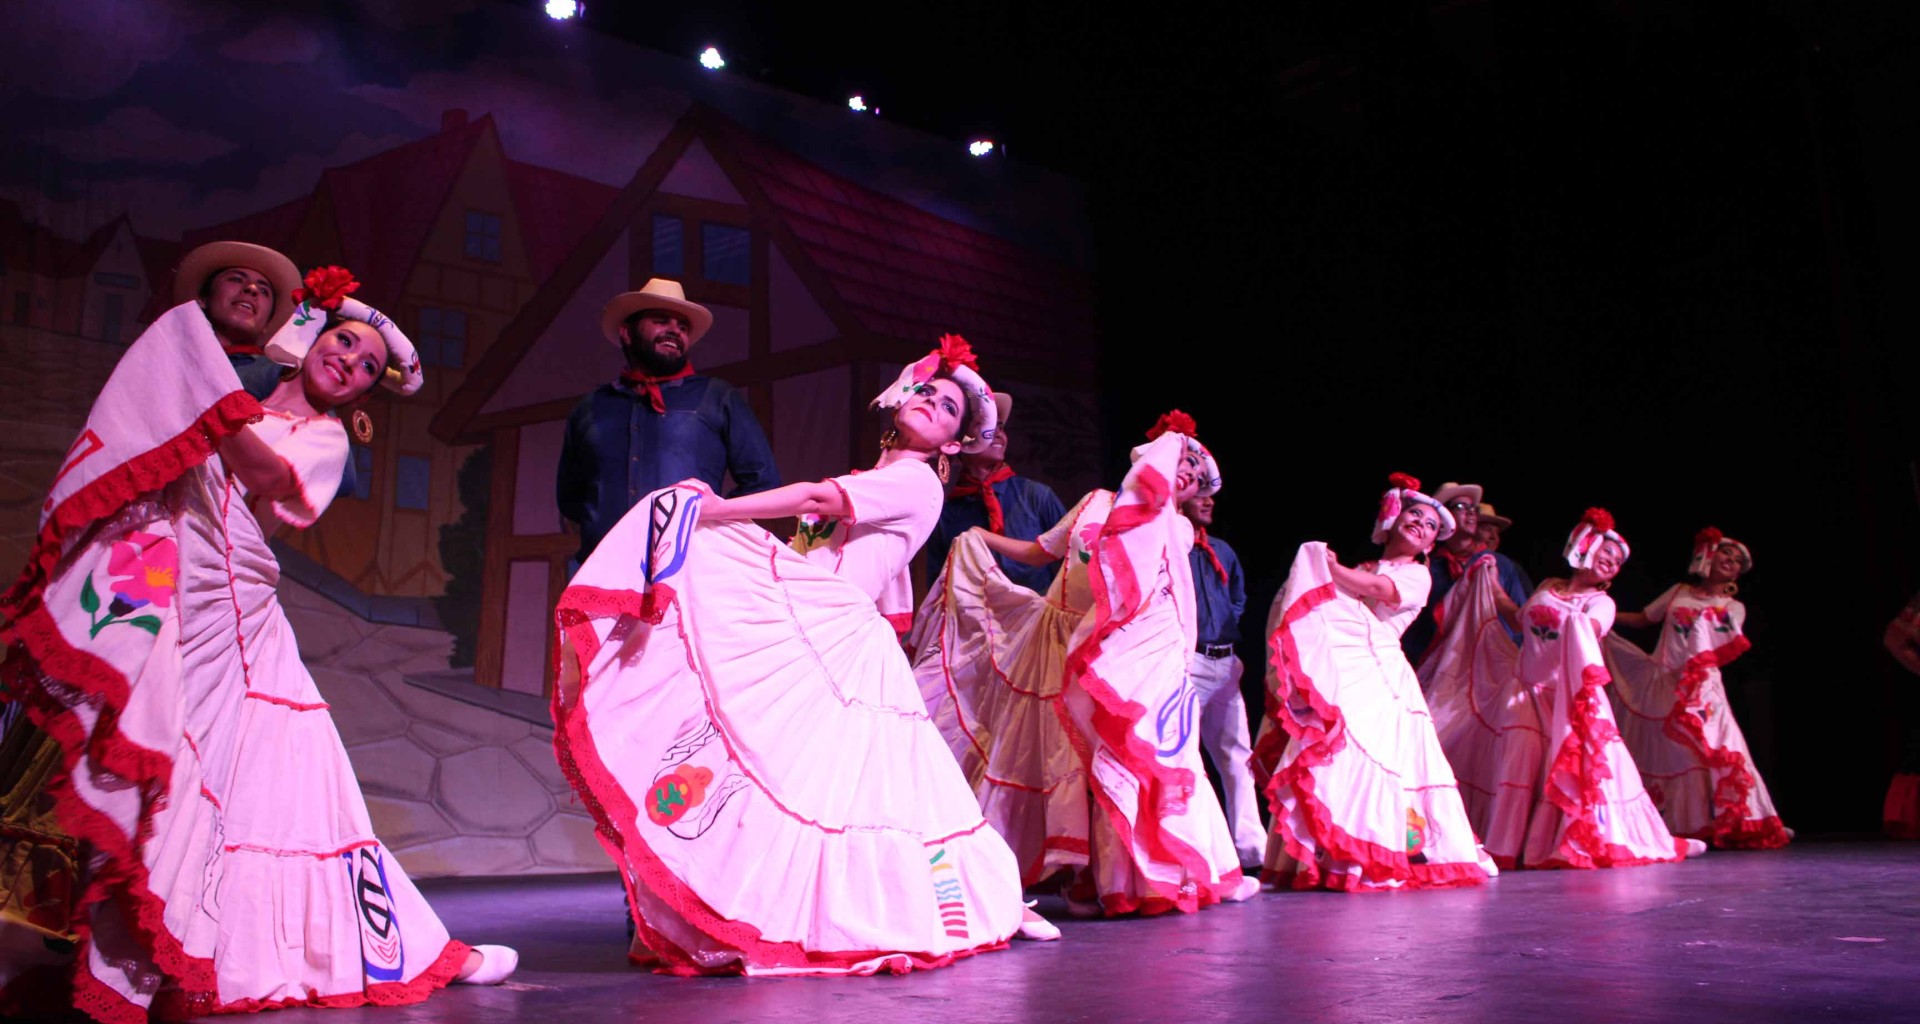 Folklor mexicano